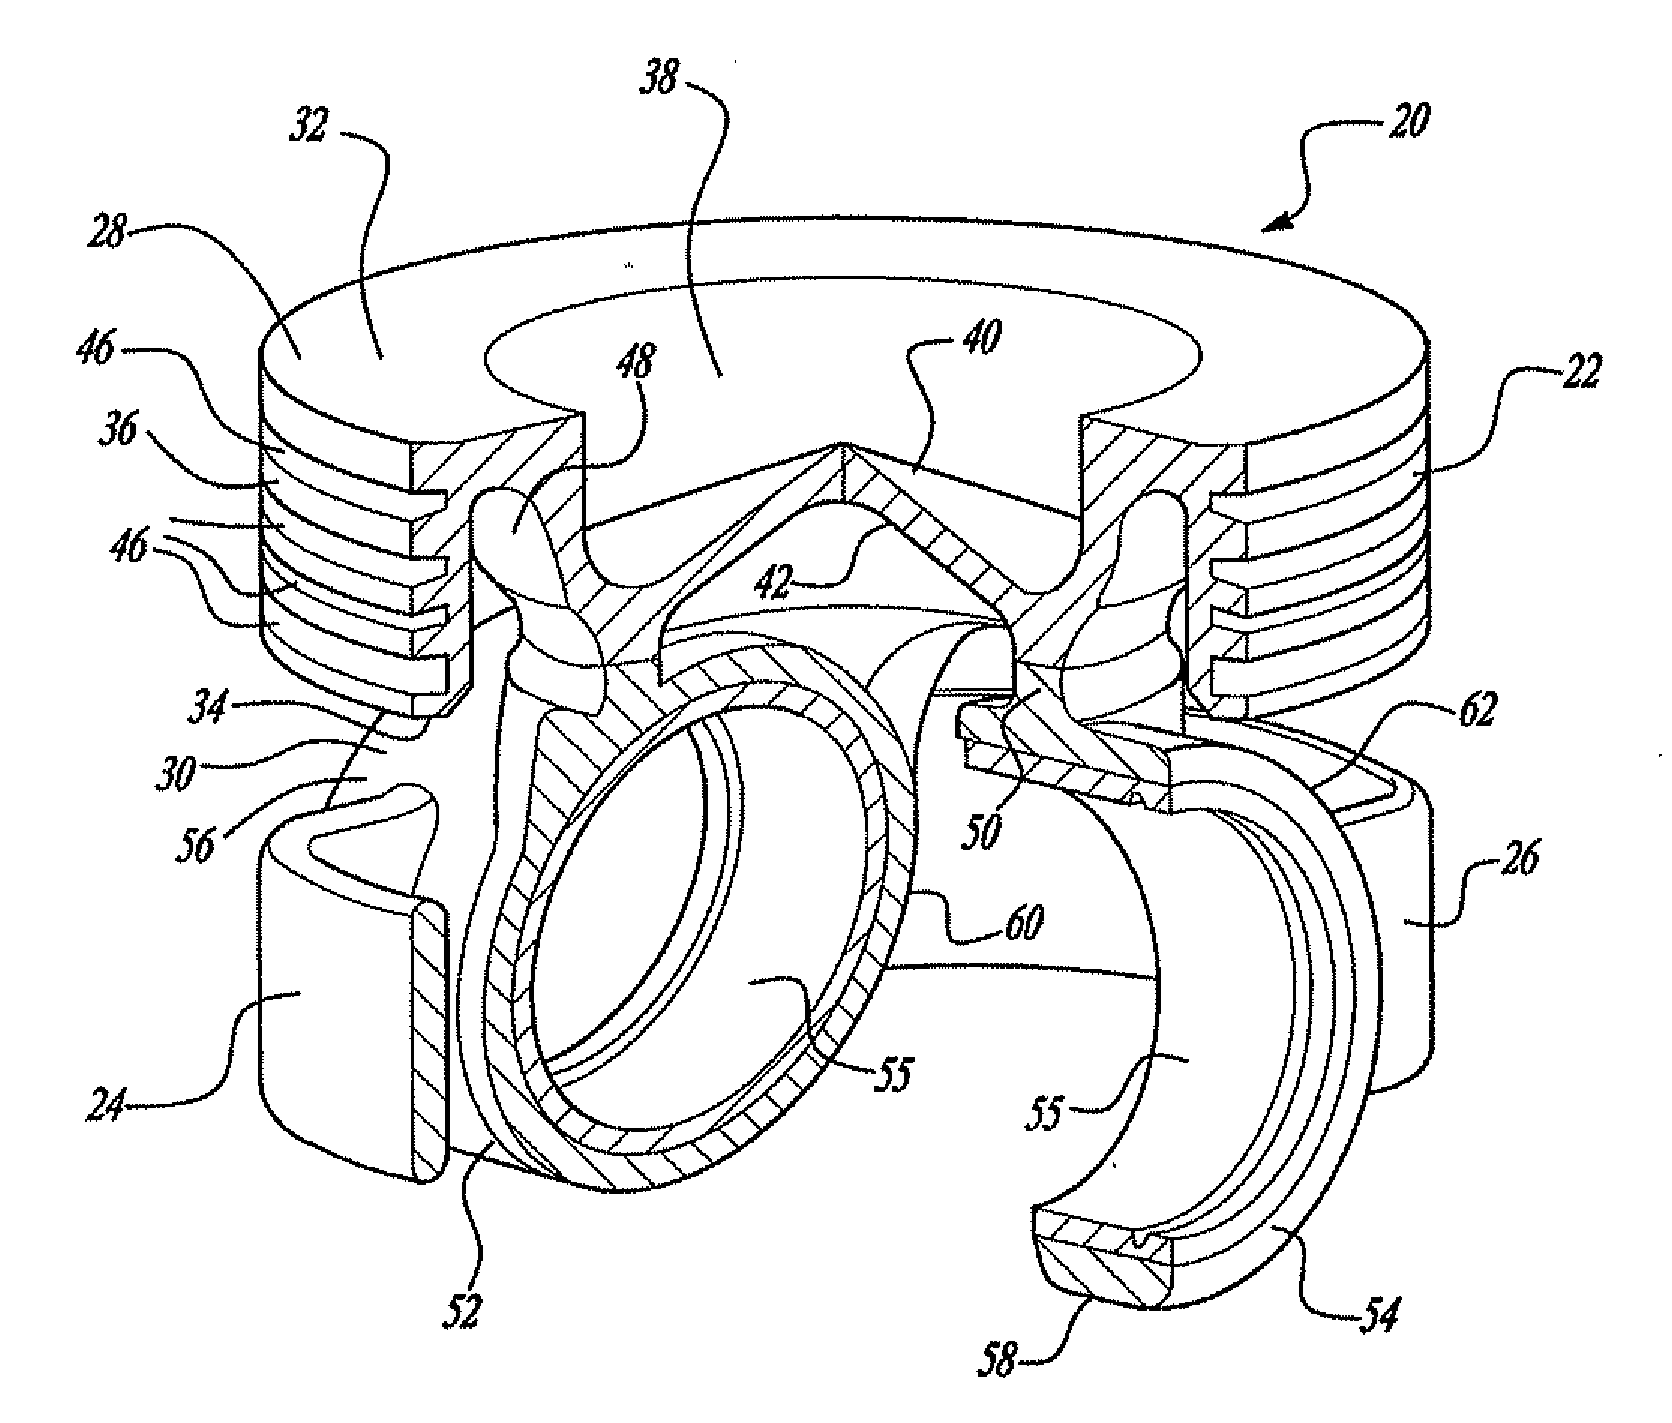 Load-optimized interior of a piston